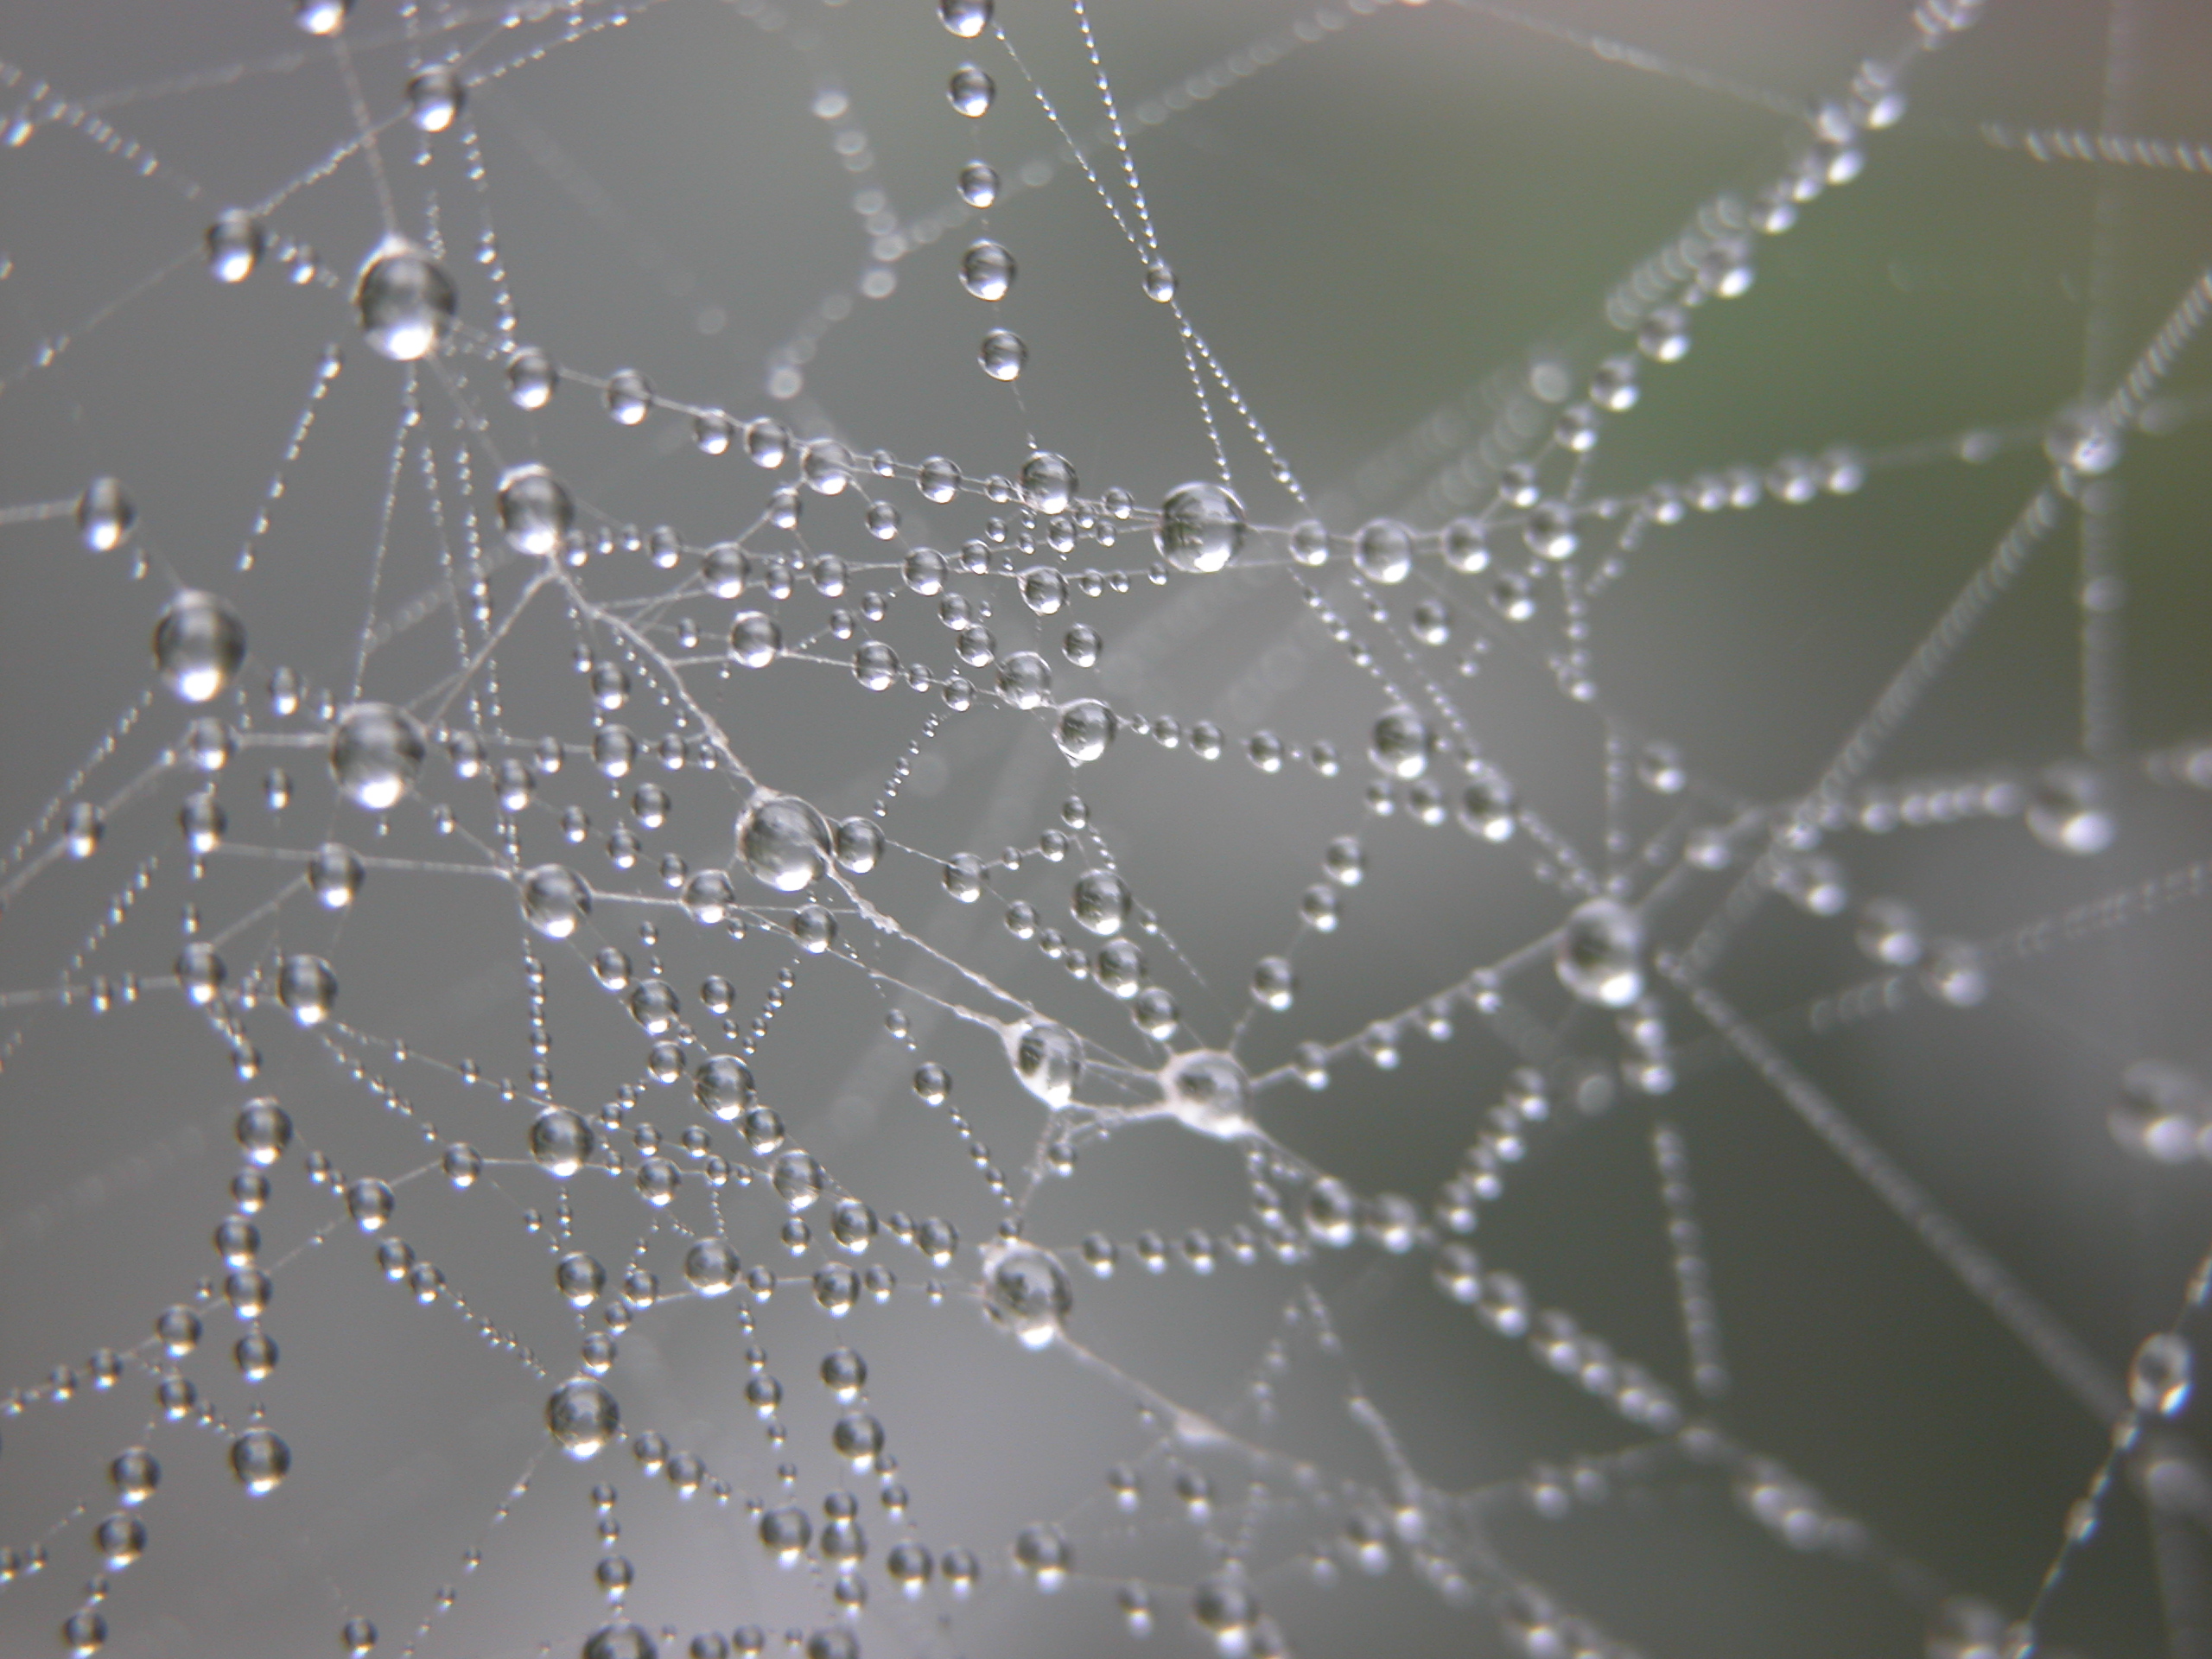 spiderweb web waterdrop waterdrops droplet droplets universe dewdrop dewdrops water cobweb